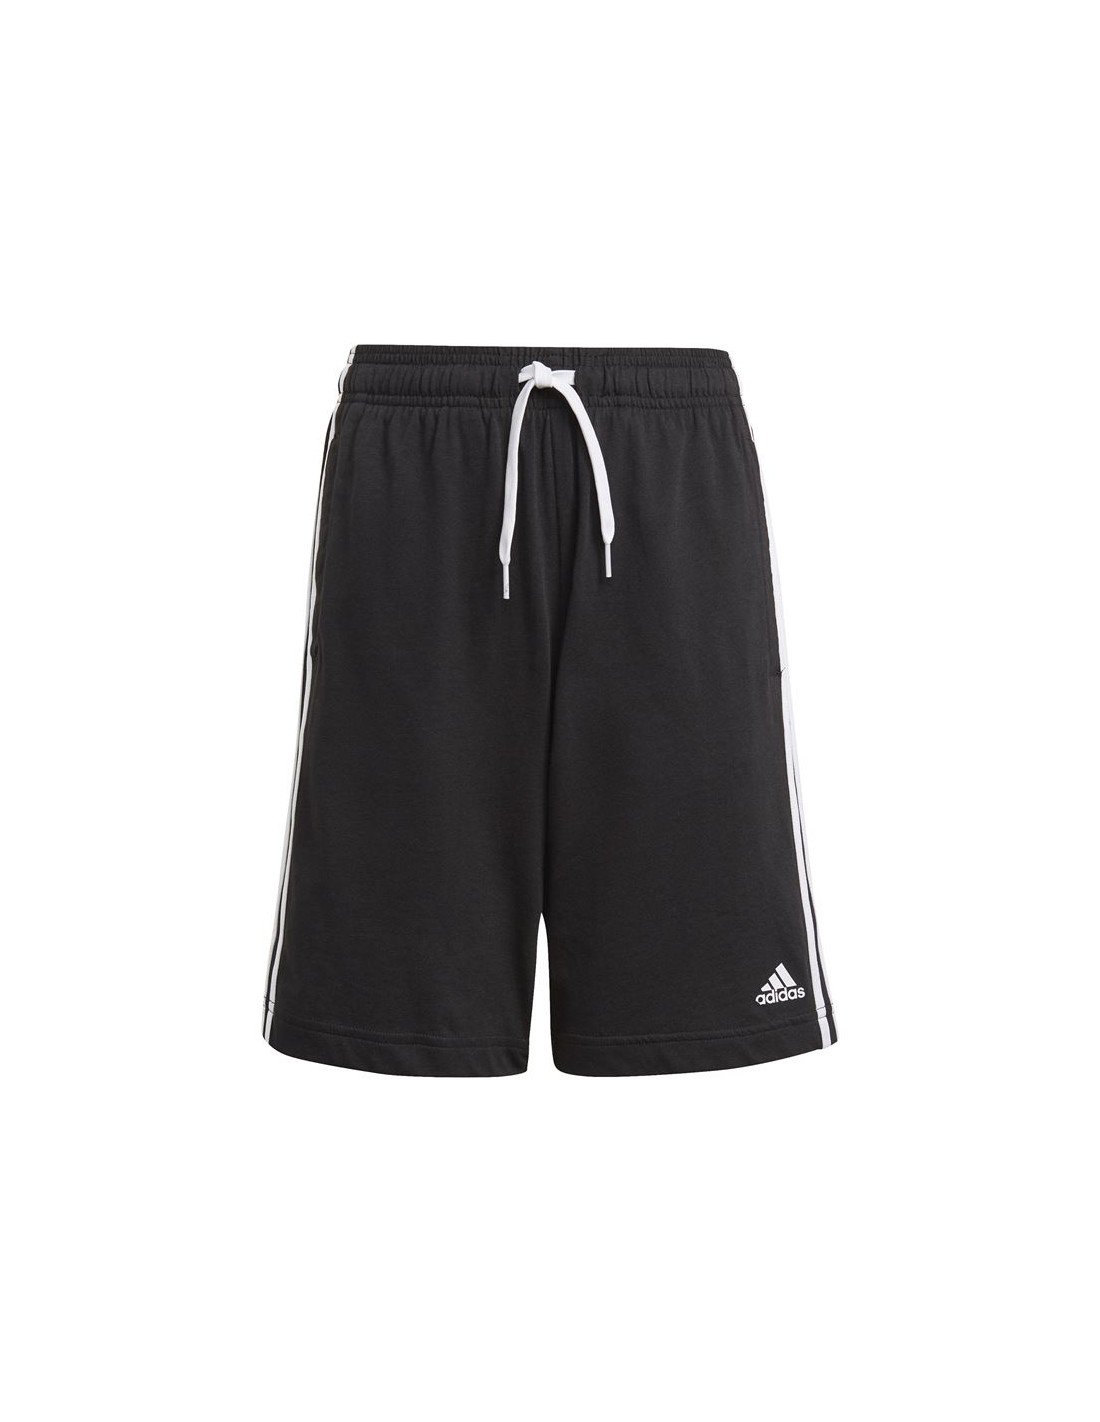 Pantalones cortos adidas essentials 3 bandas boys black